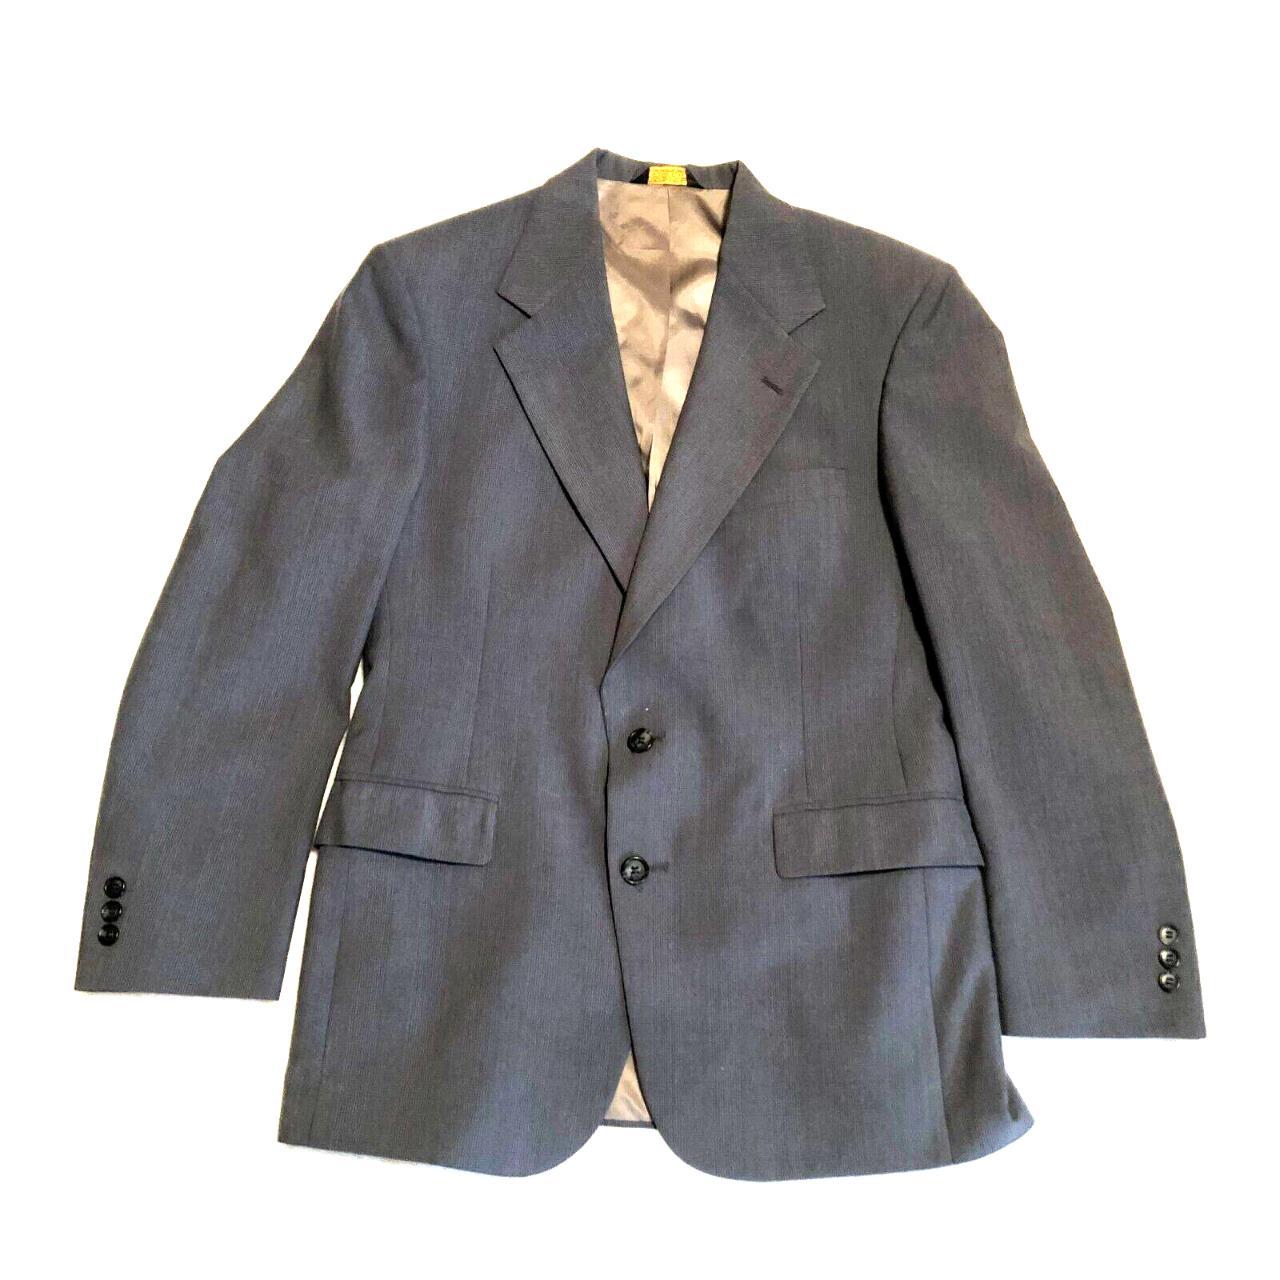 VTG Johnny Carson Suit Jacket Size 42R Grey Made in... - Depop